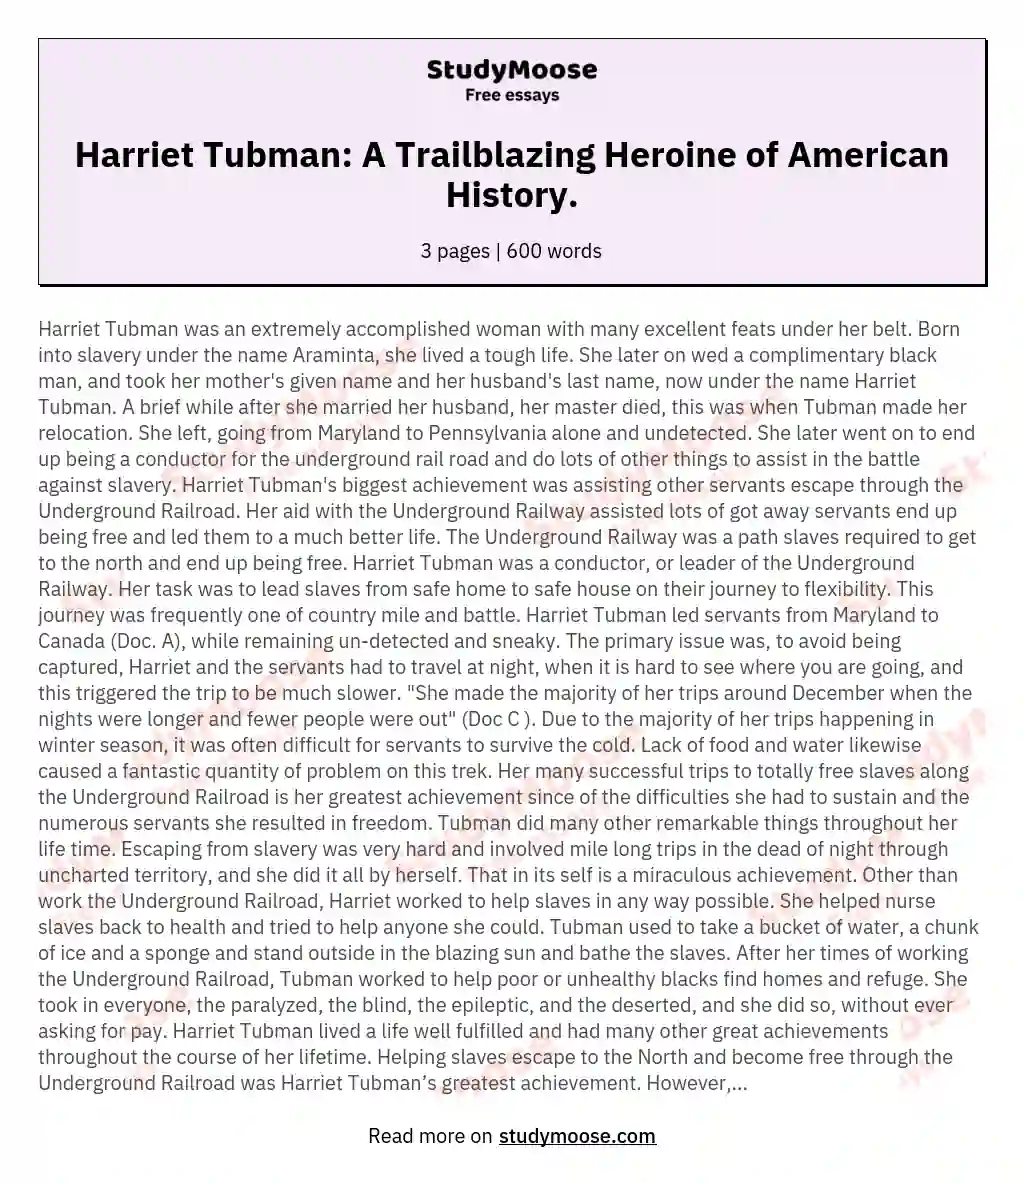 Harriet Tubman: A Trailblazing Heroine of American History. essay